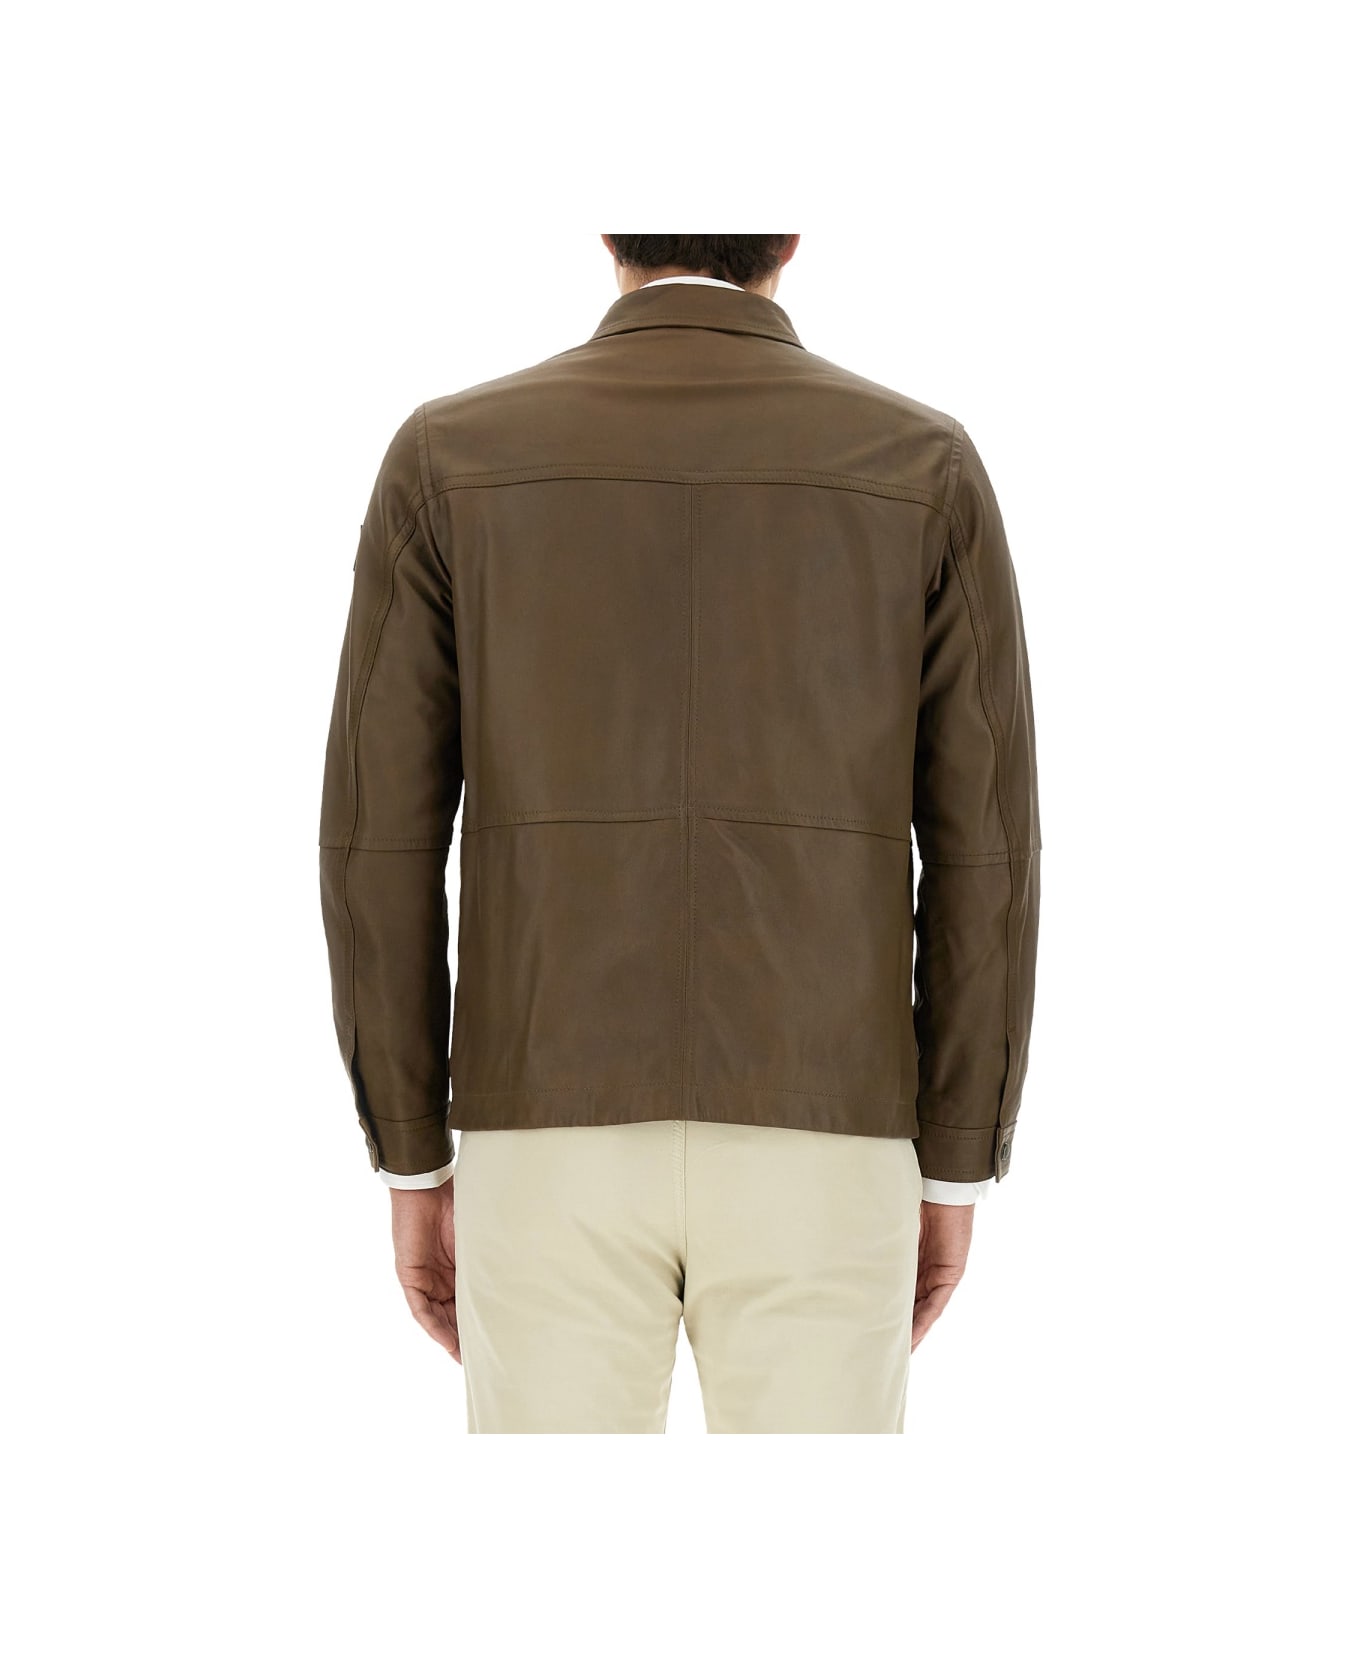 Hugo Boss Jacket With Collar - BROWN ジャケット